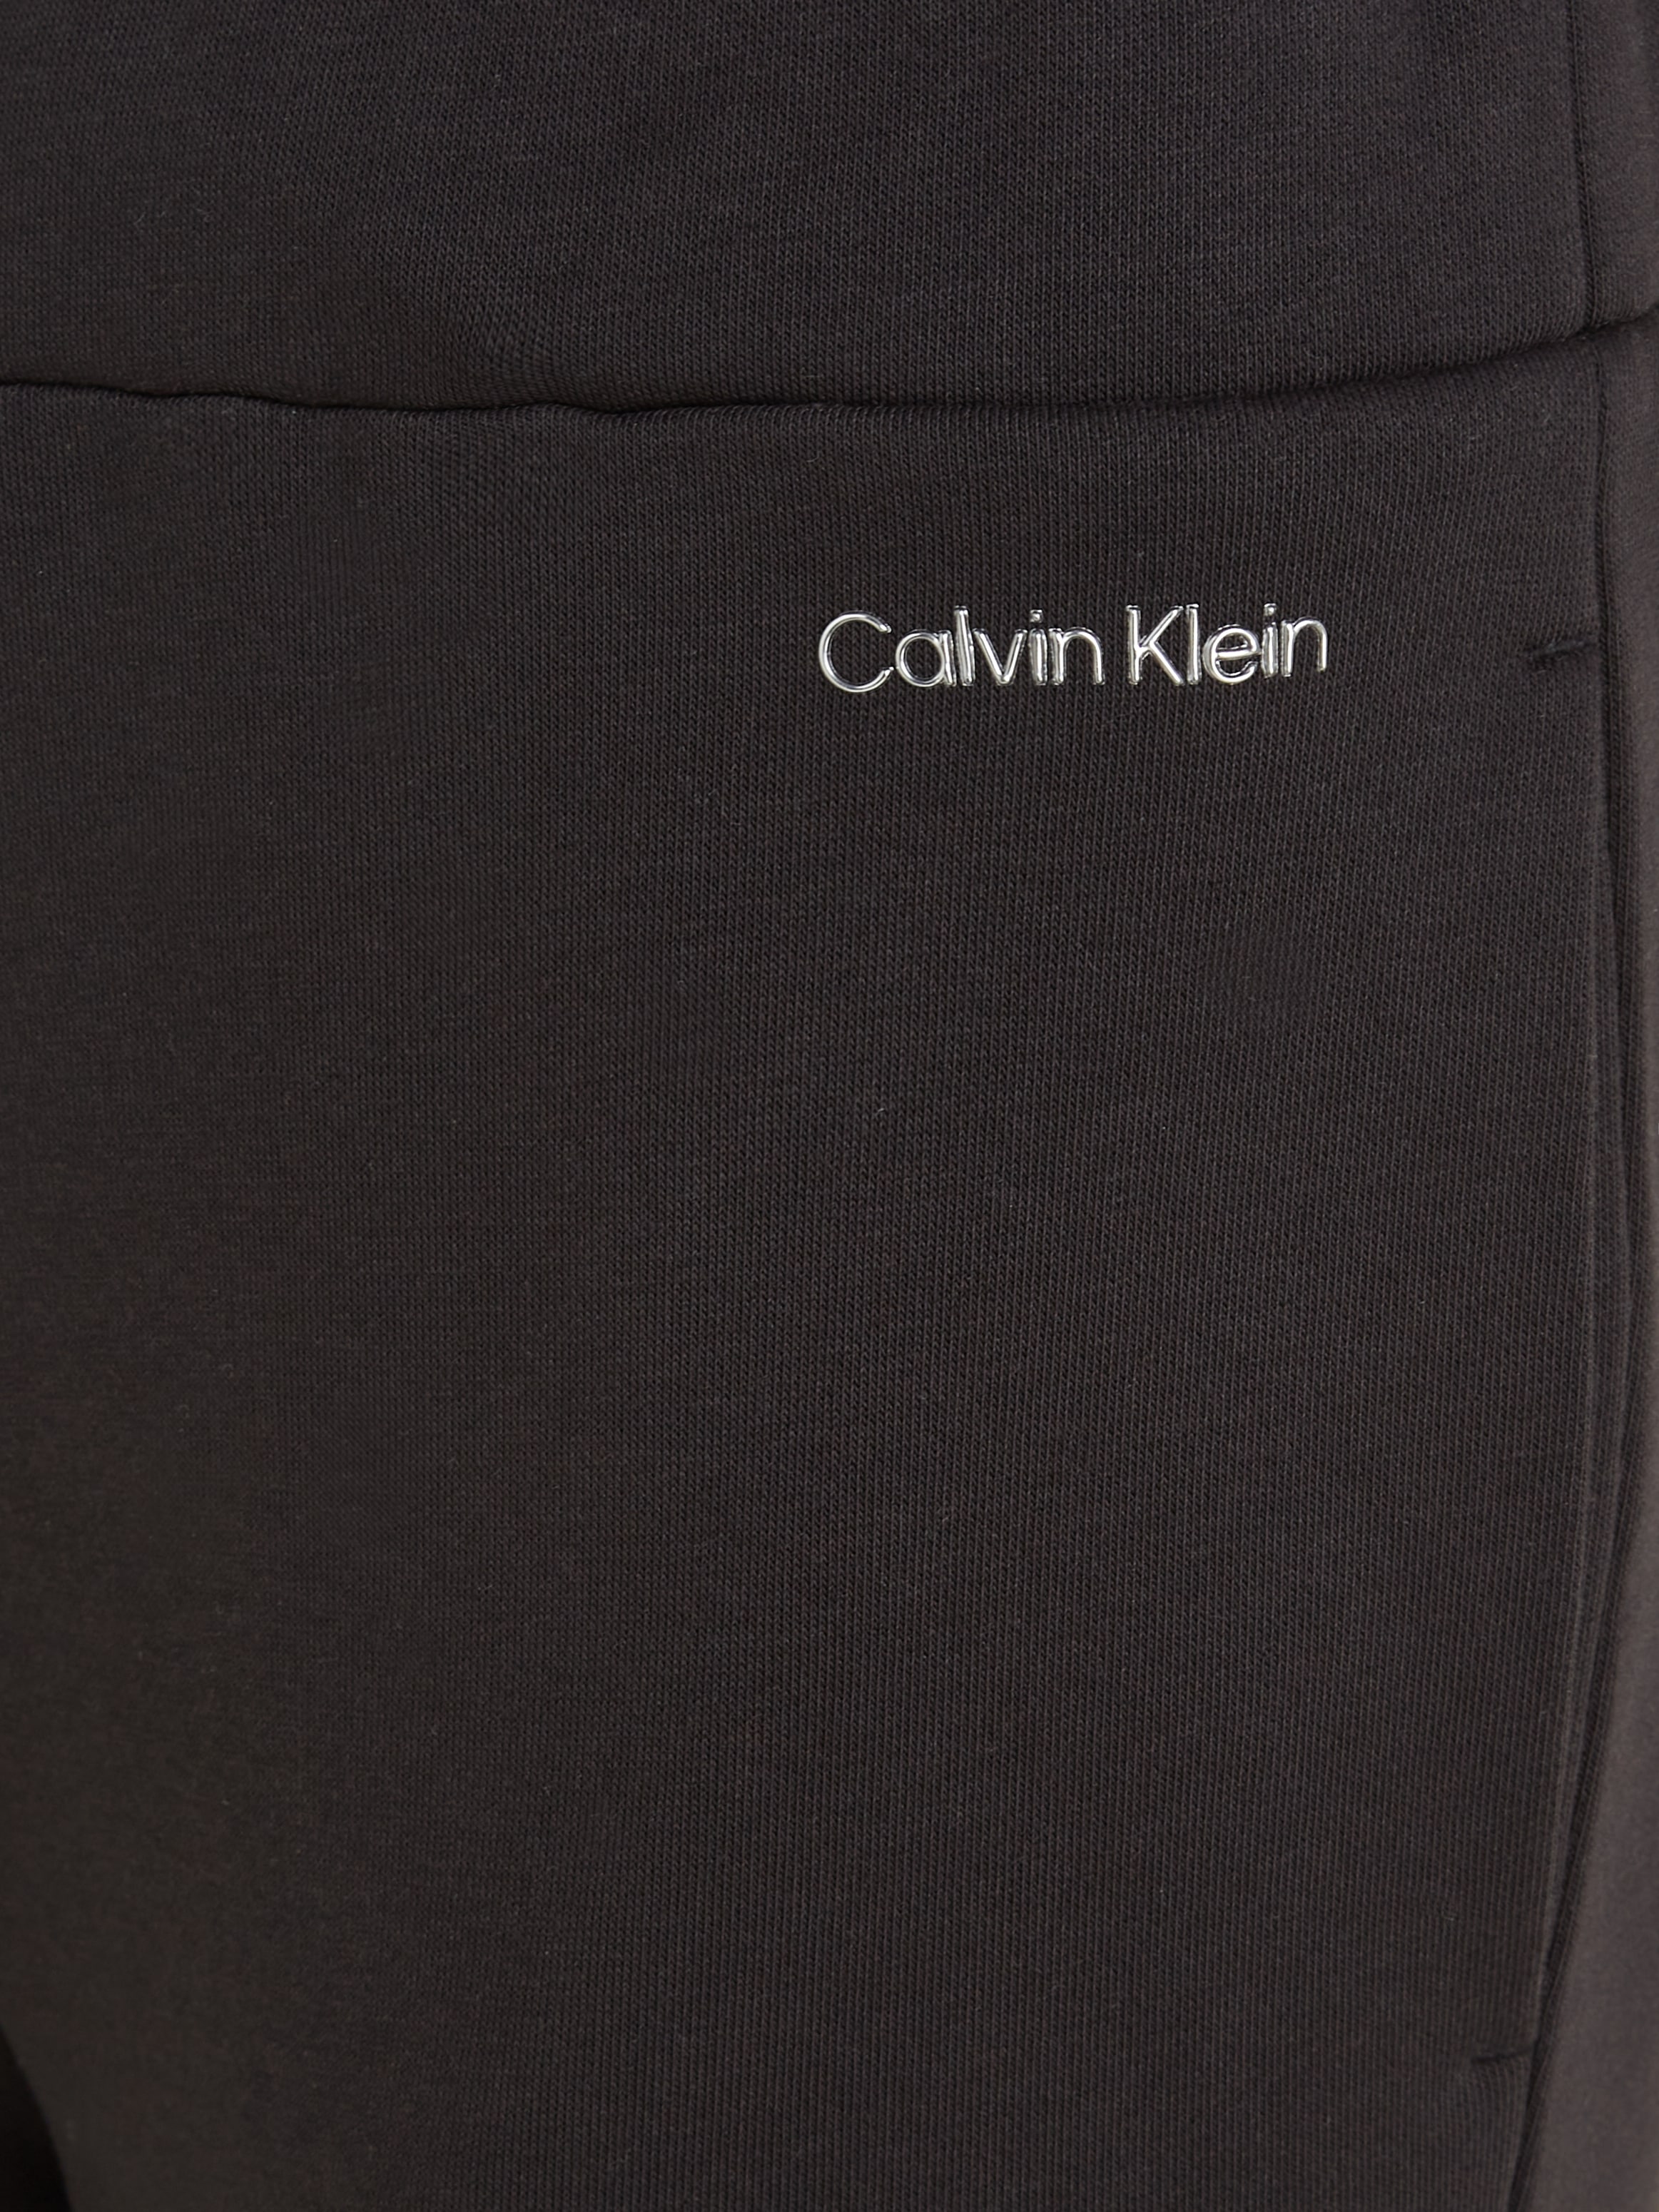 kaufen Klein online MICRO JOGGER« Calvin »METALLIC Sweathose LOGO